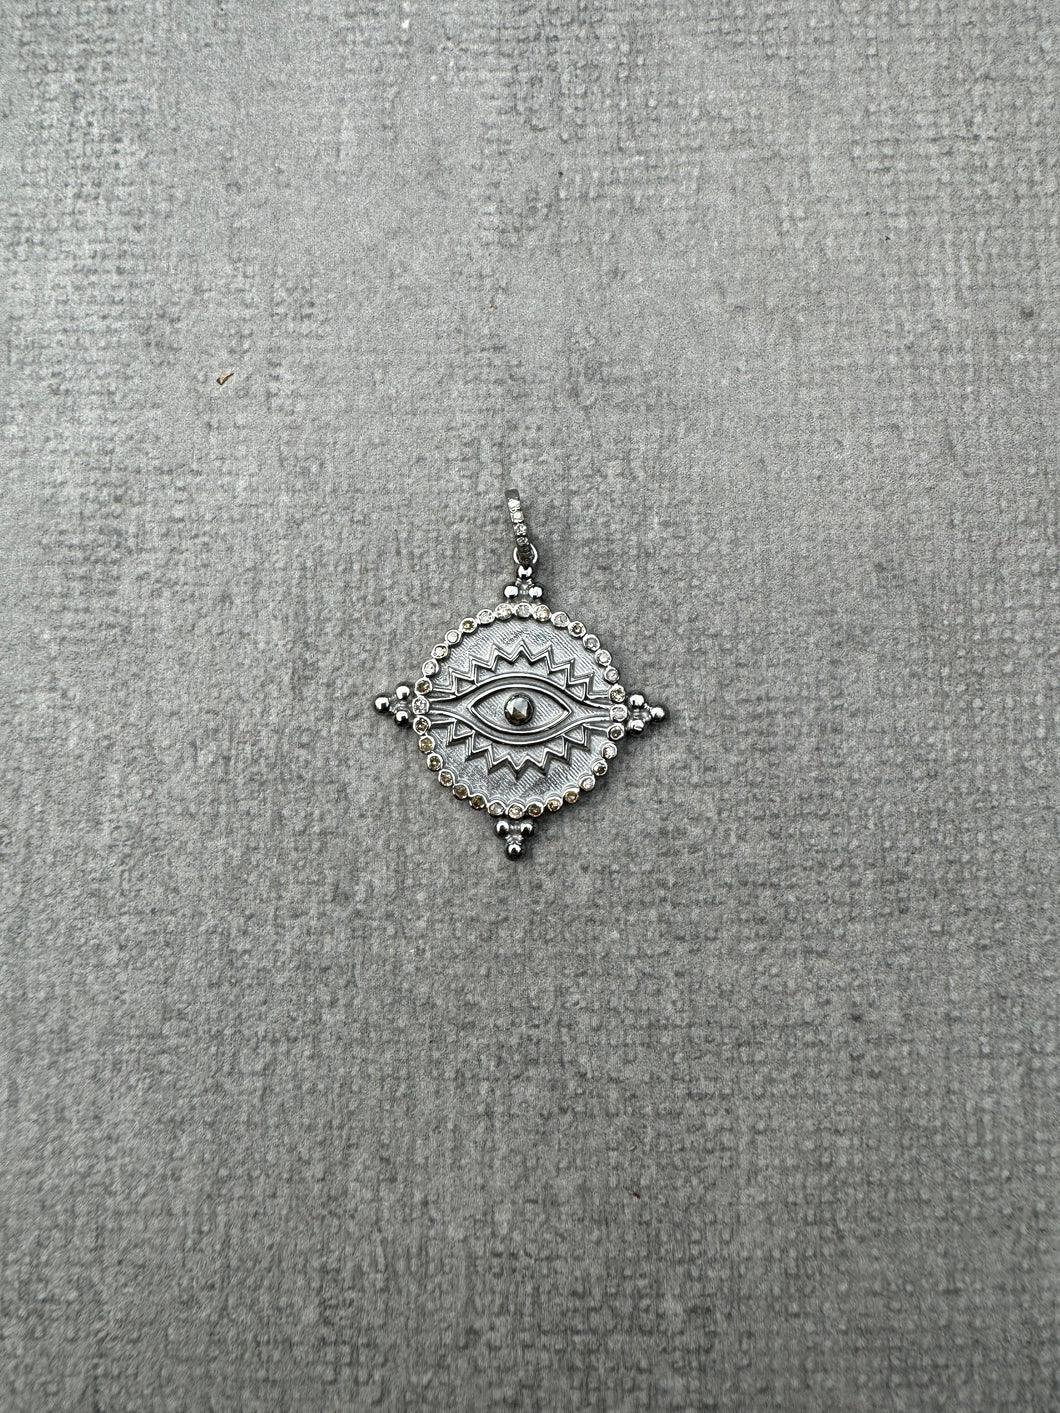 Evil Eye Pendant with Diamond Details